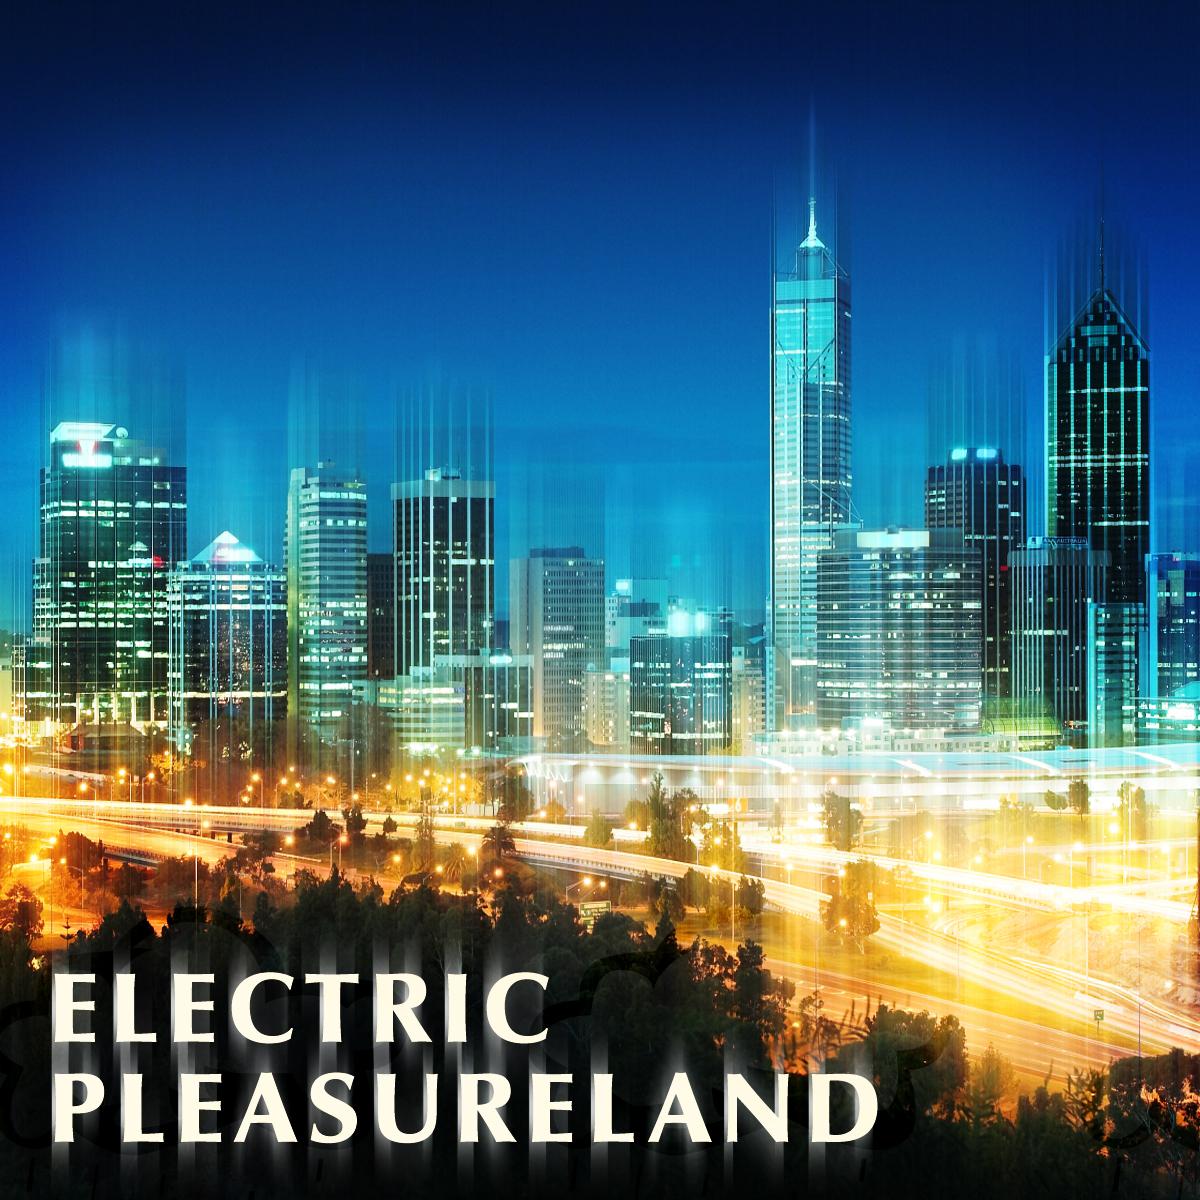 Electric Pleasure Land